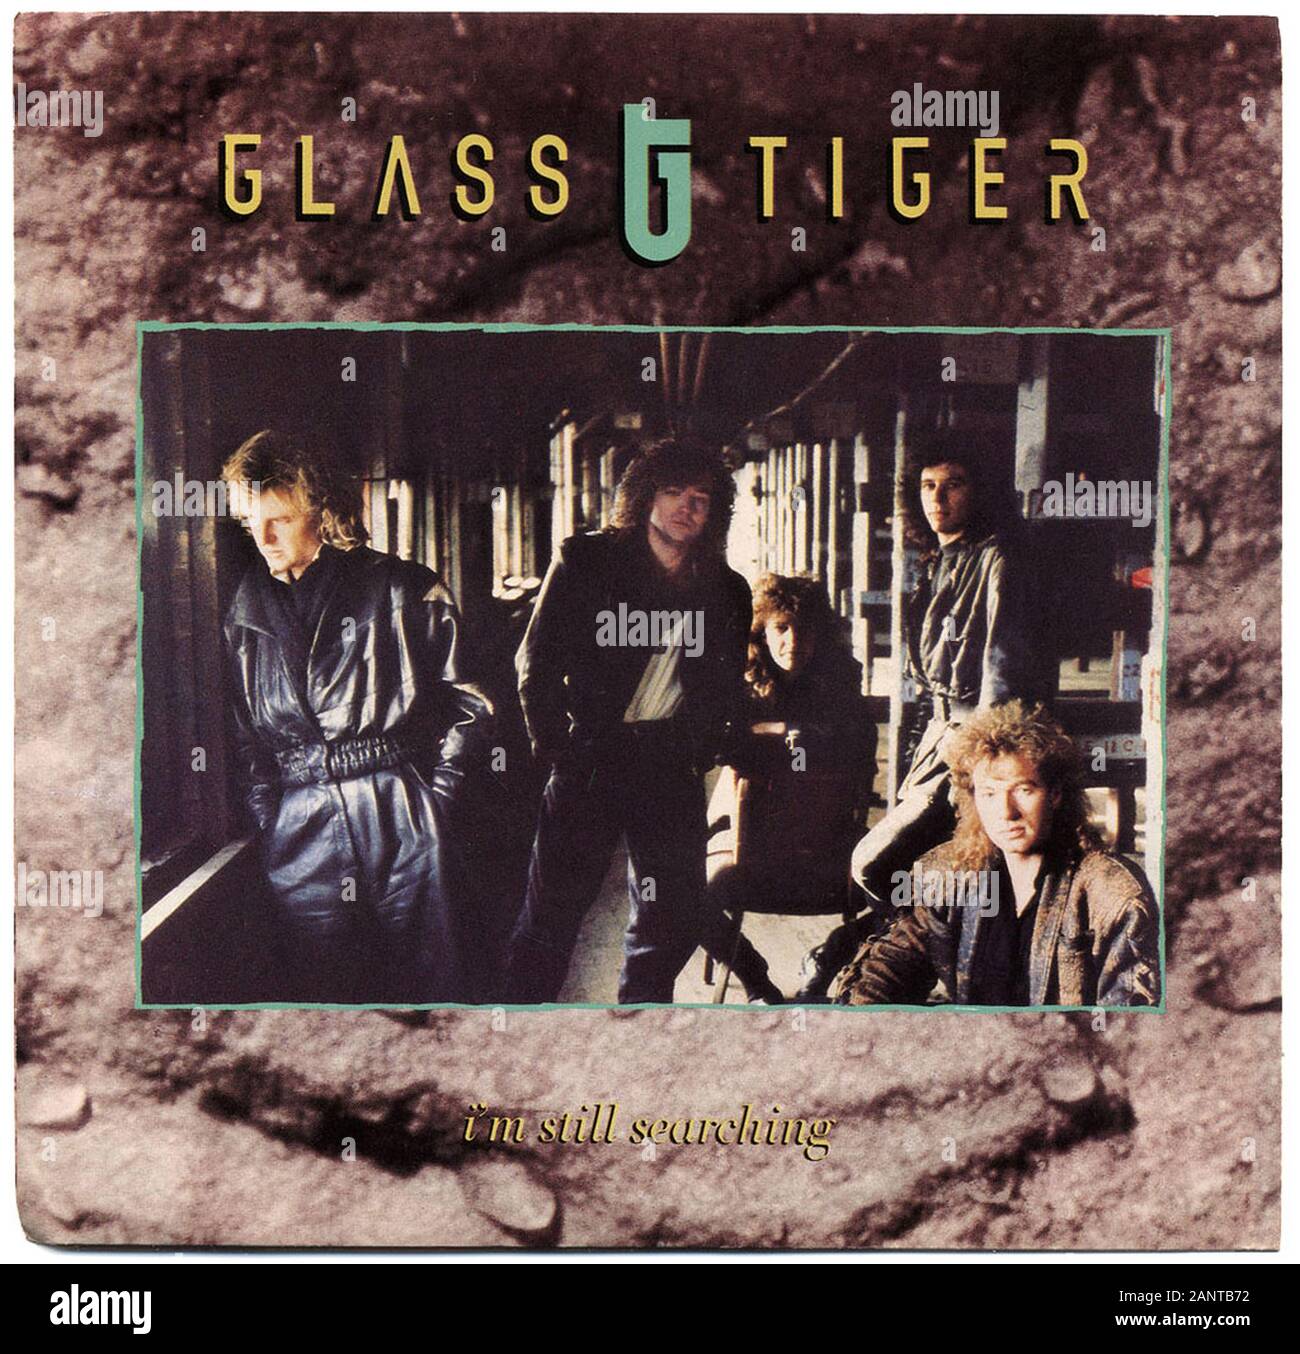 Glass Tiger - Still Searching - Classic vintage vinyl album Stock Photo